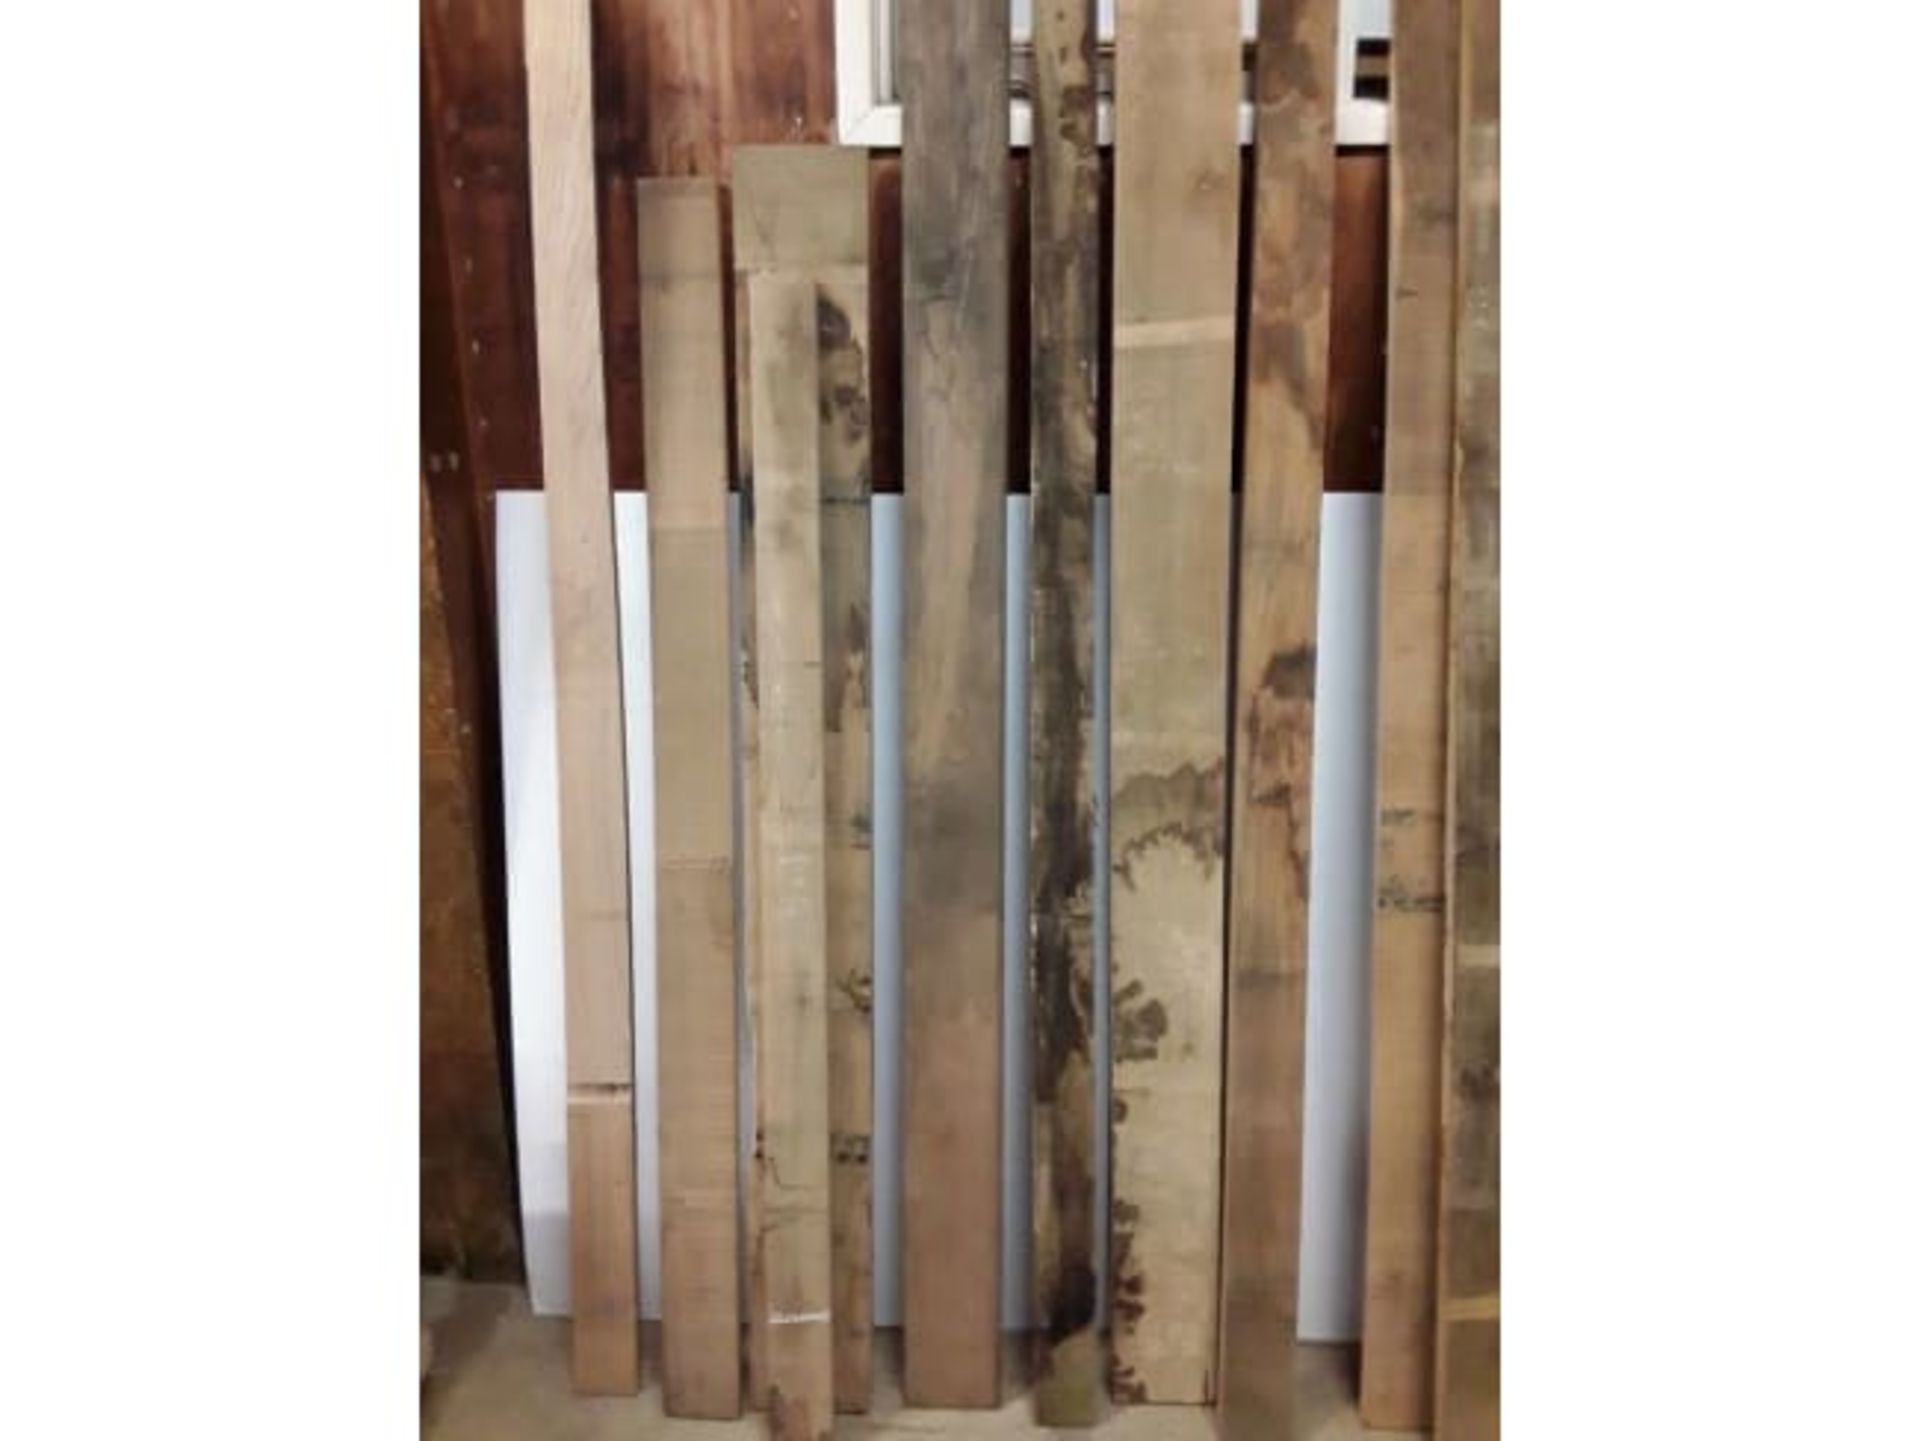 25x Hardwood Kiln Dried Sawn English Oak Boards / Planks / Timber Offcuts - Image 3 of 3